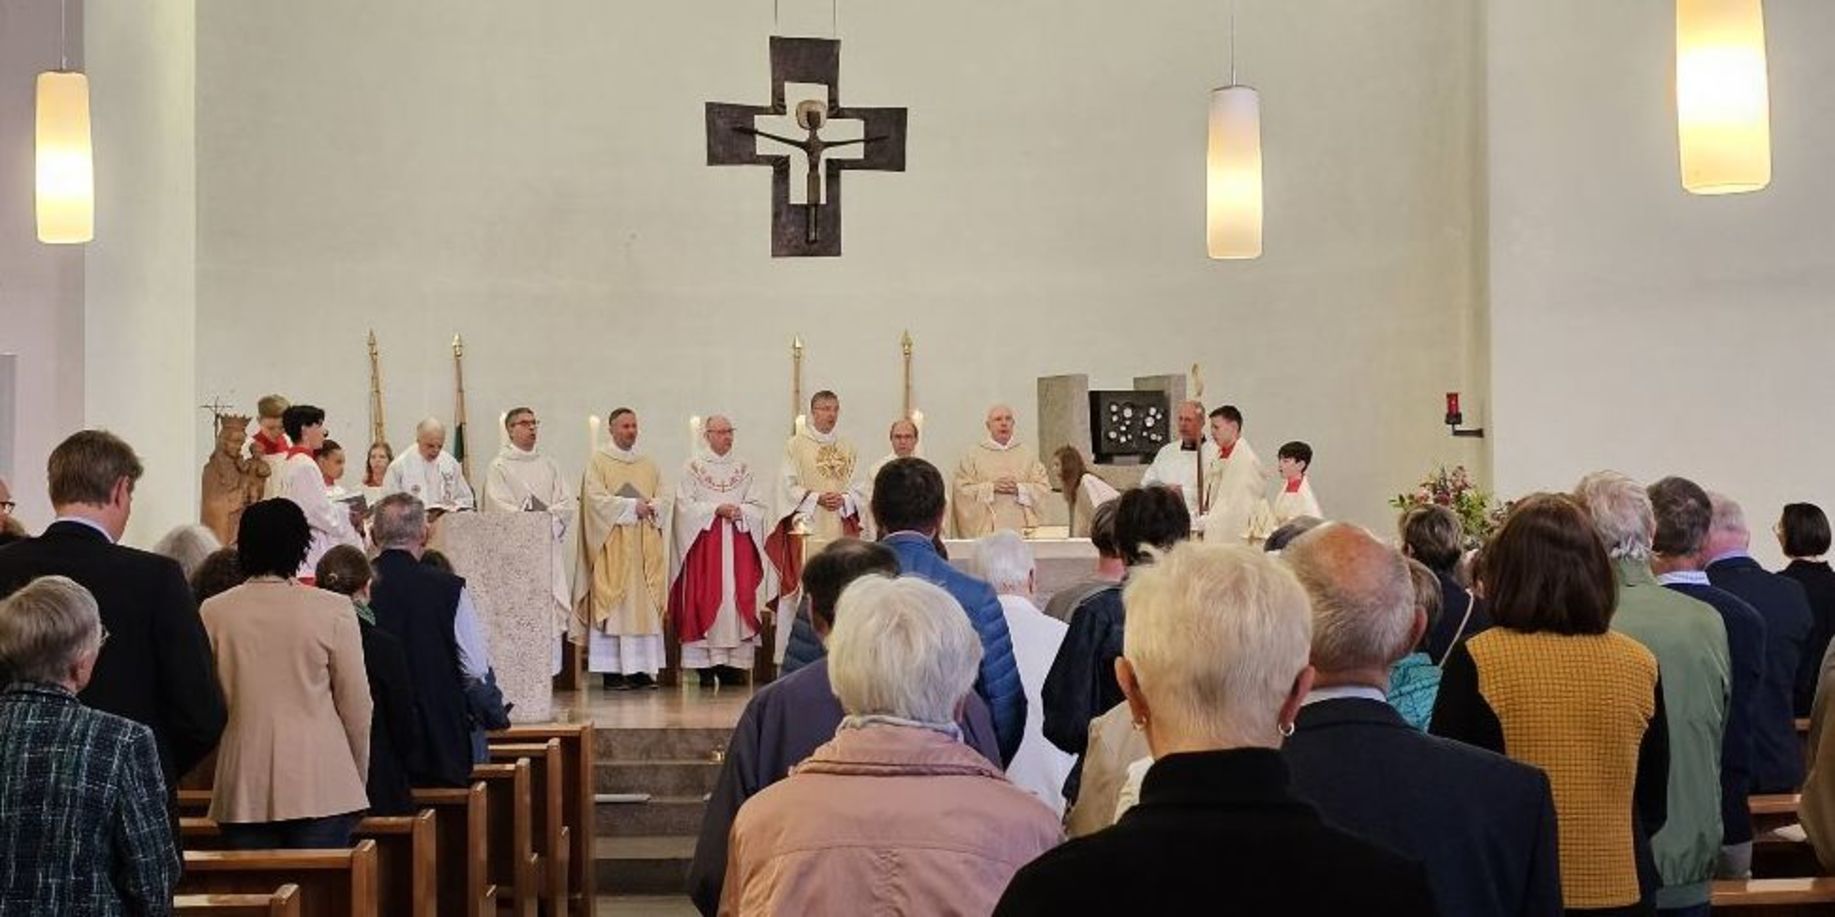 Bischof Gerber predigte bei Gemeinde-Jubiläum in Homberg (Efze). Bilder: Christus Epheta, Homberg (Efze)